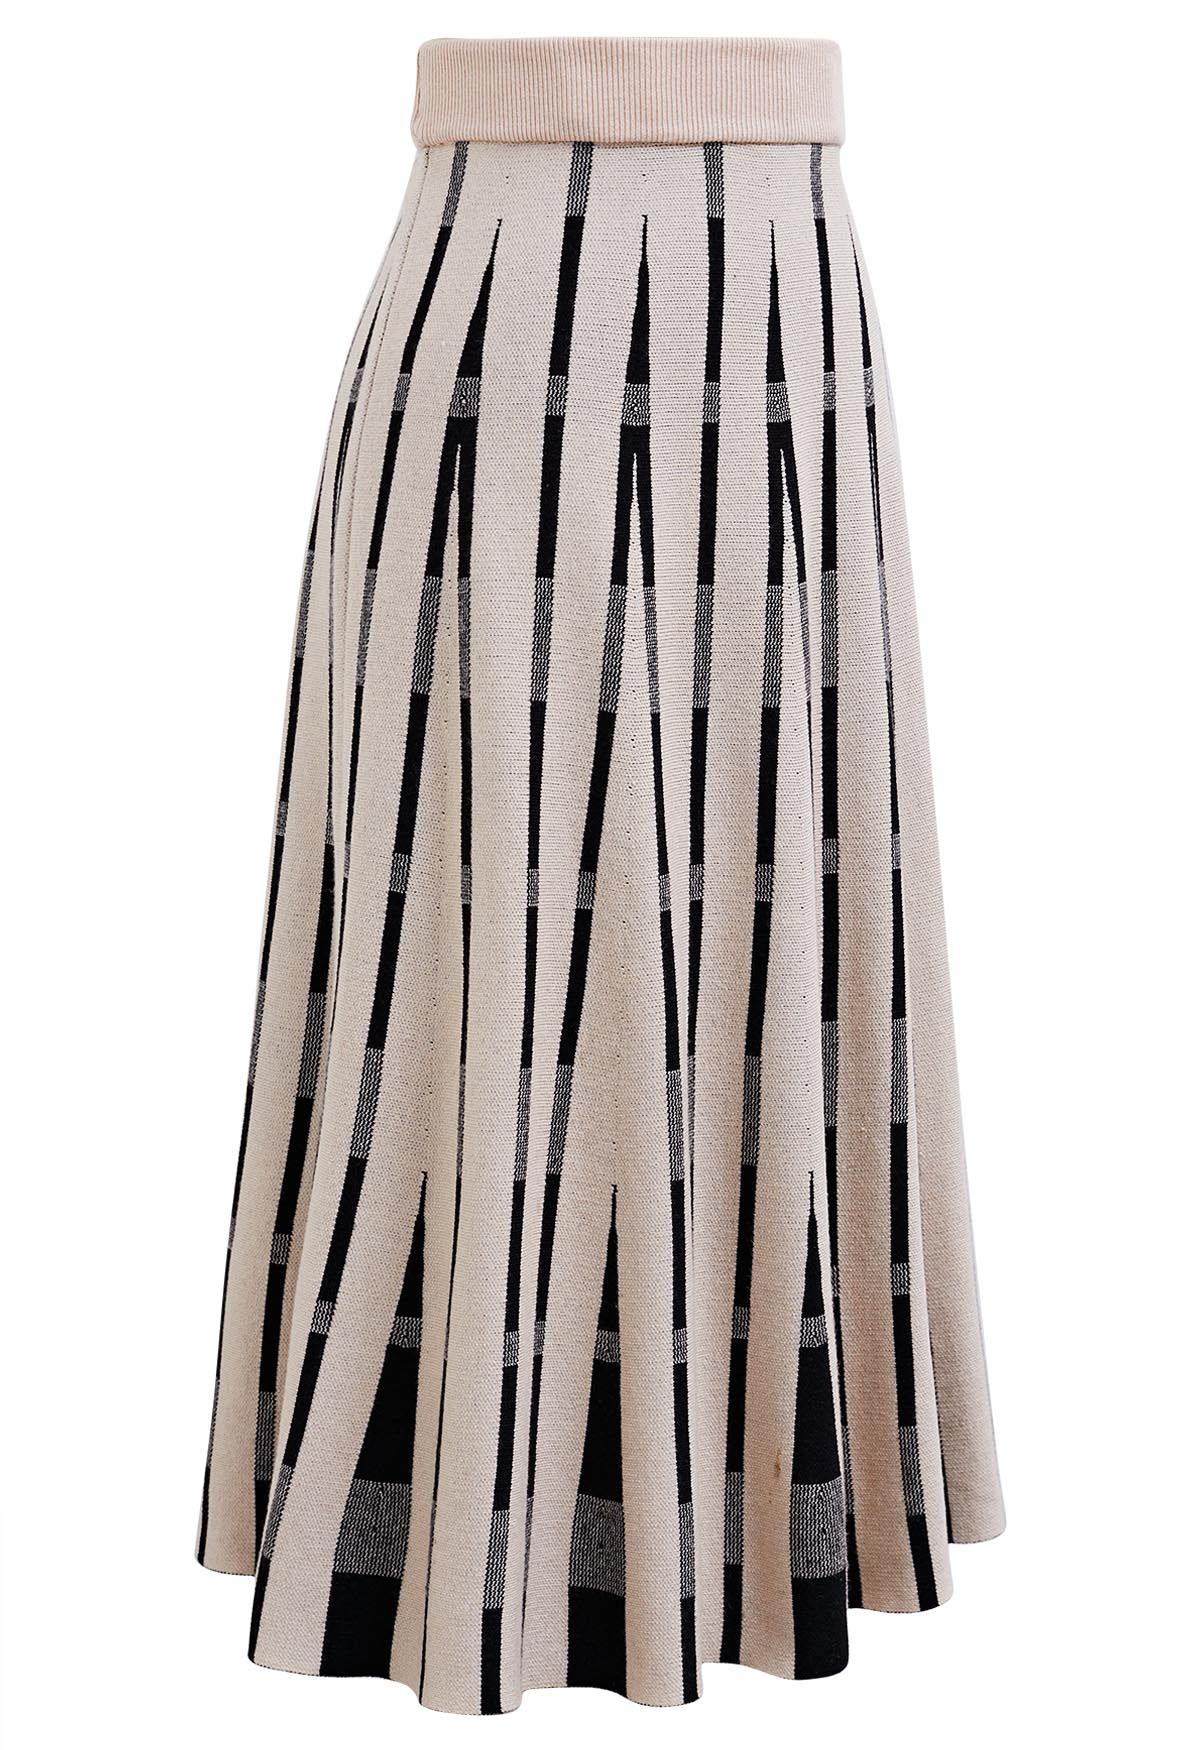 Trendsetting Striped Knit Midi Skirt in Sand